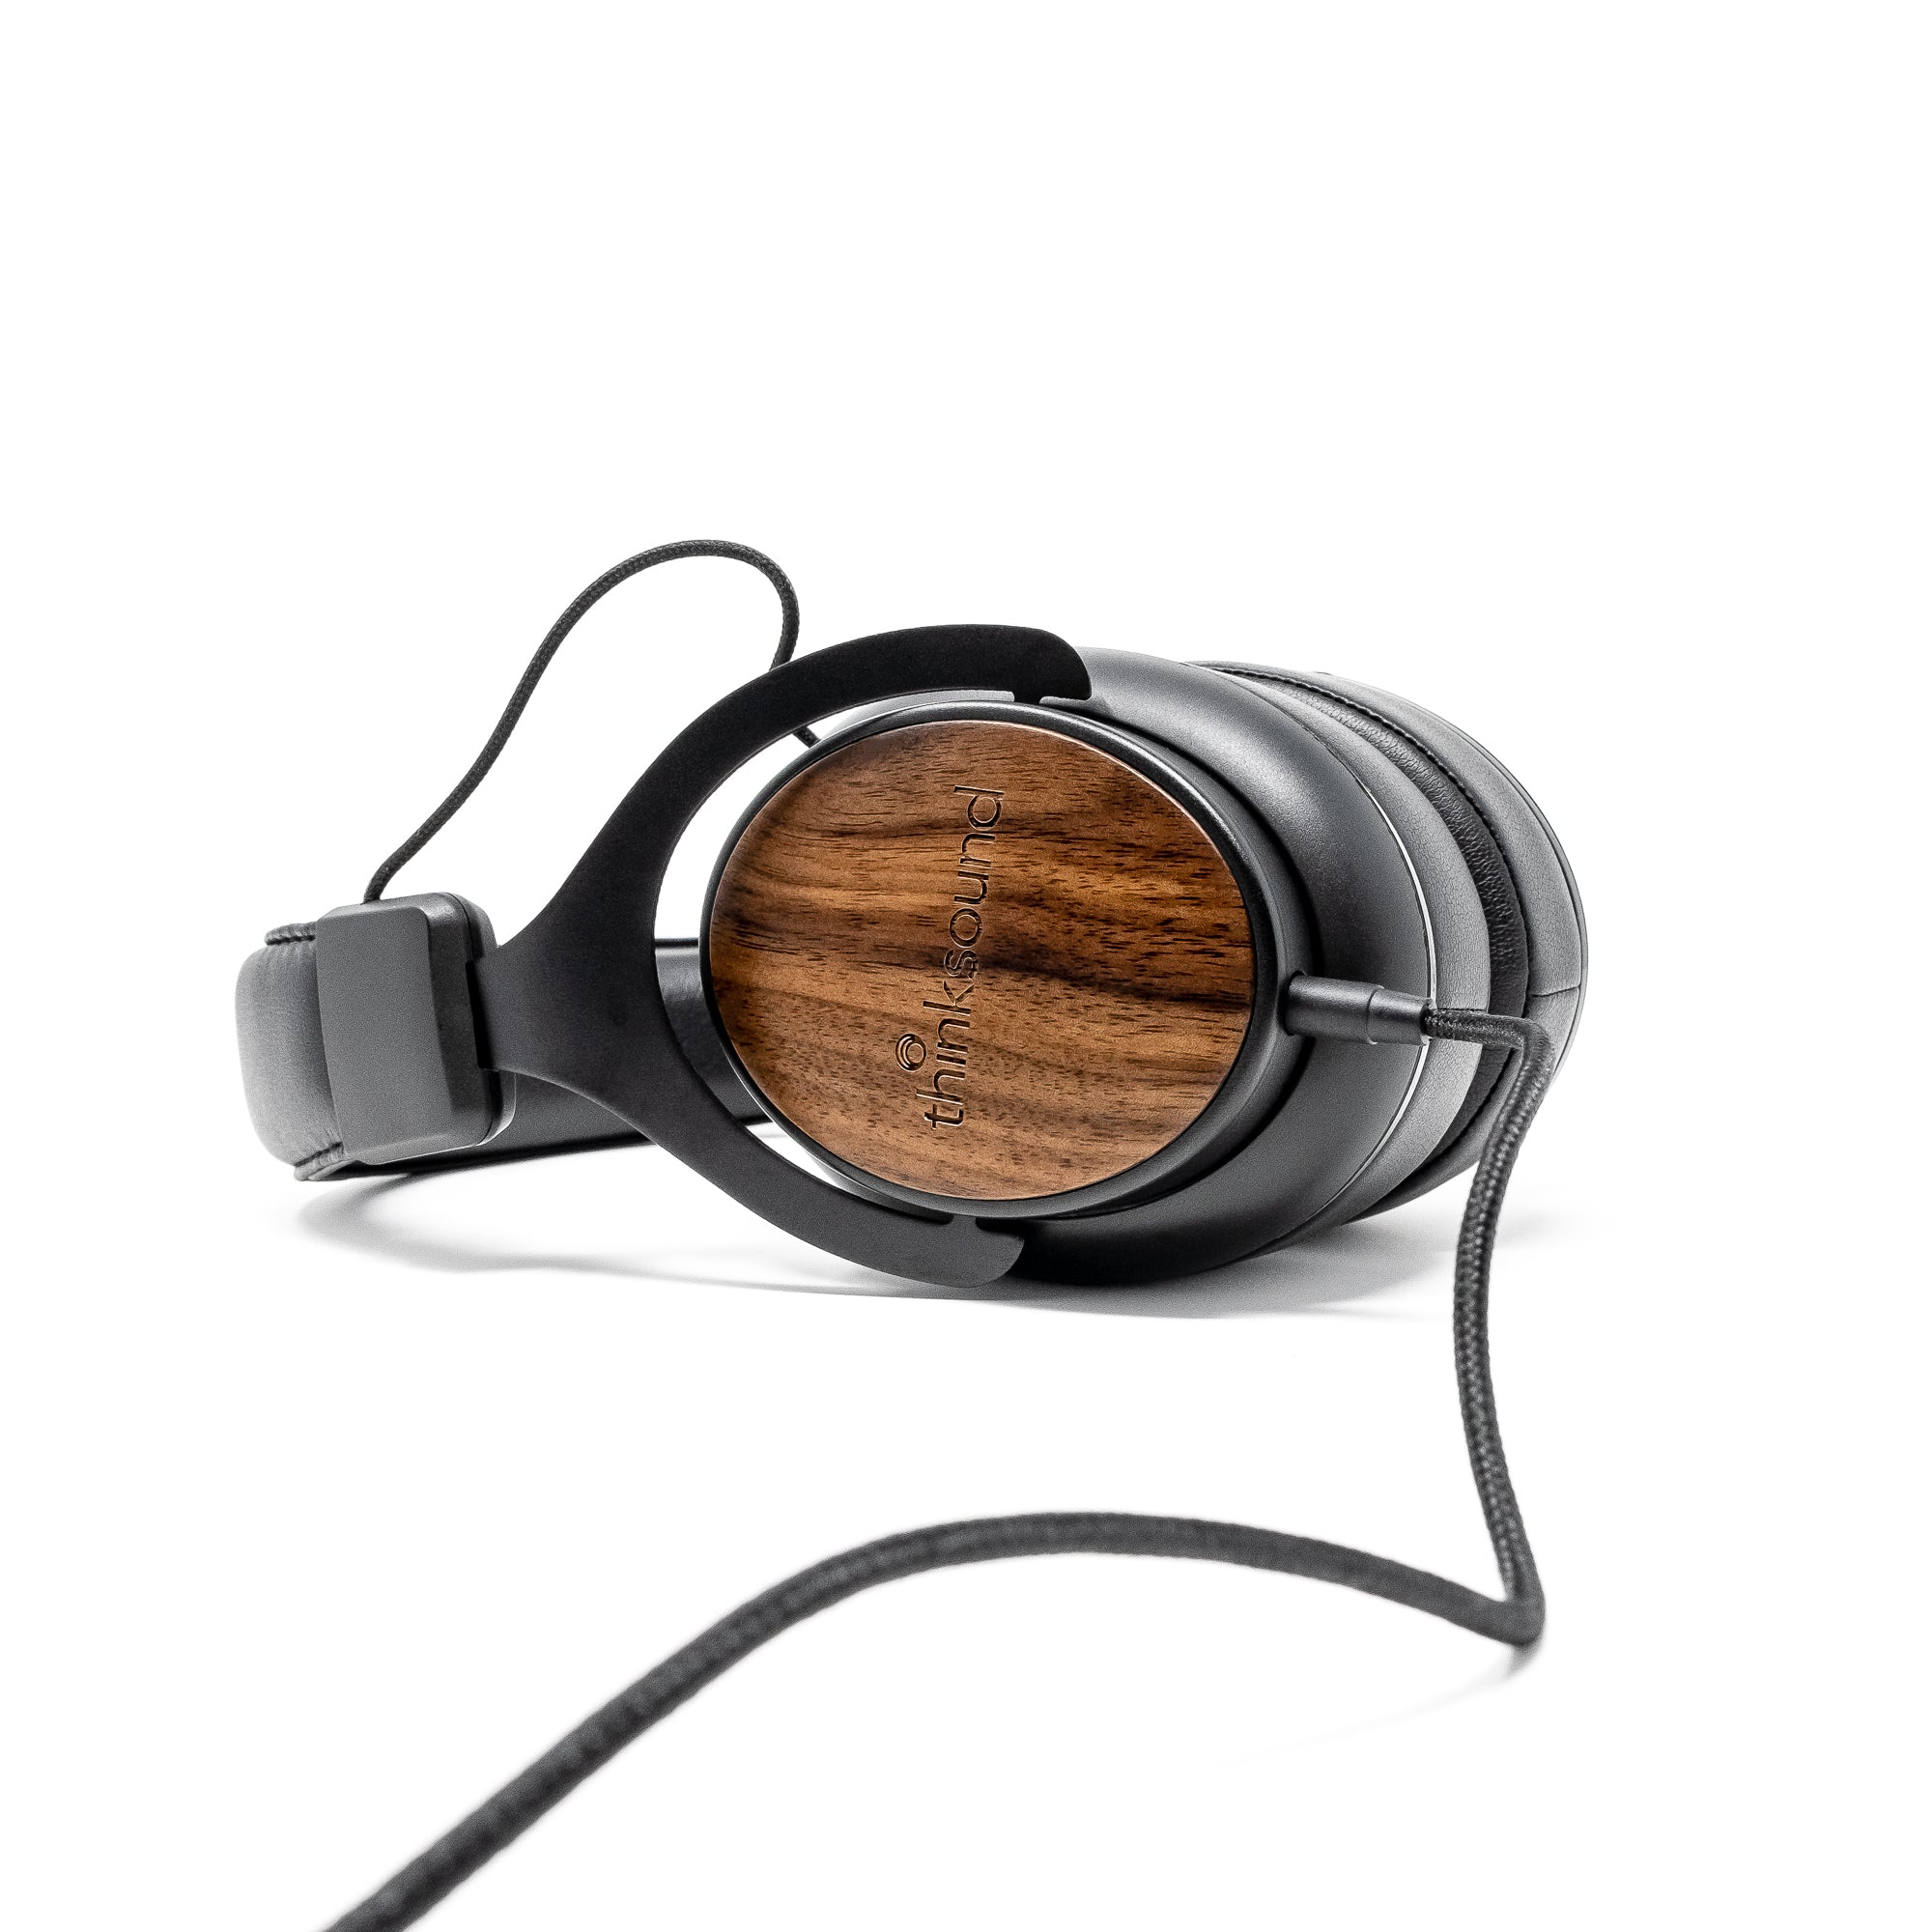 thinksound ov21 headphones with sustainably harvested walnut